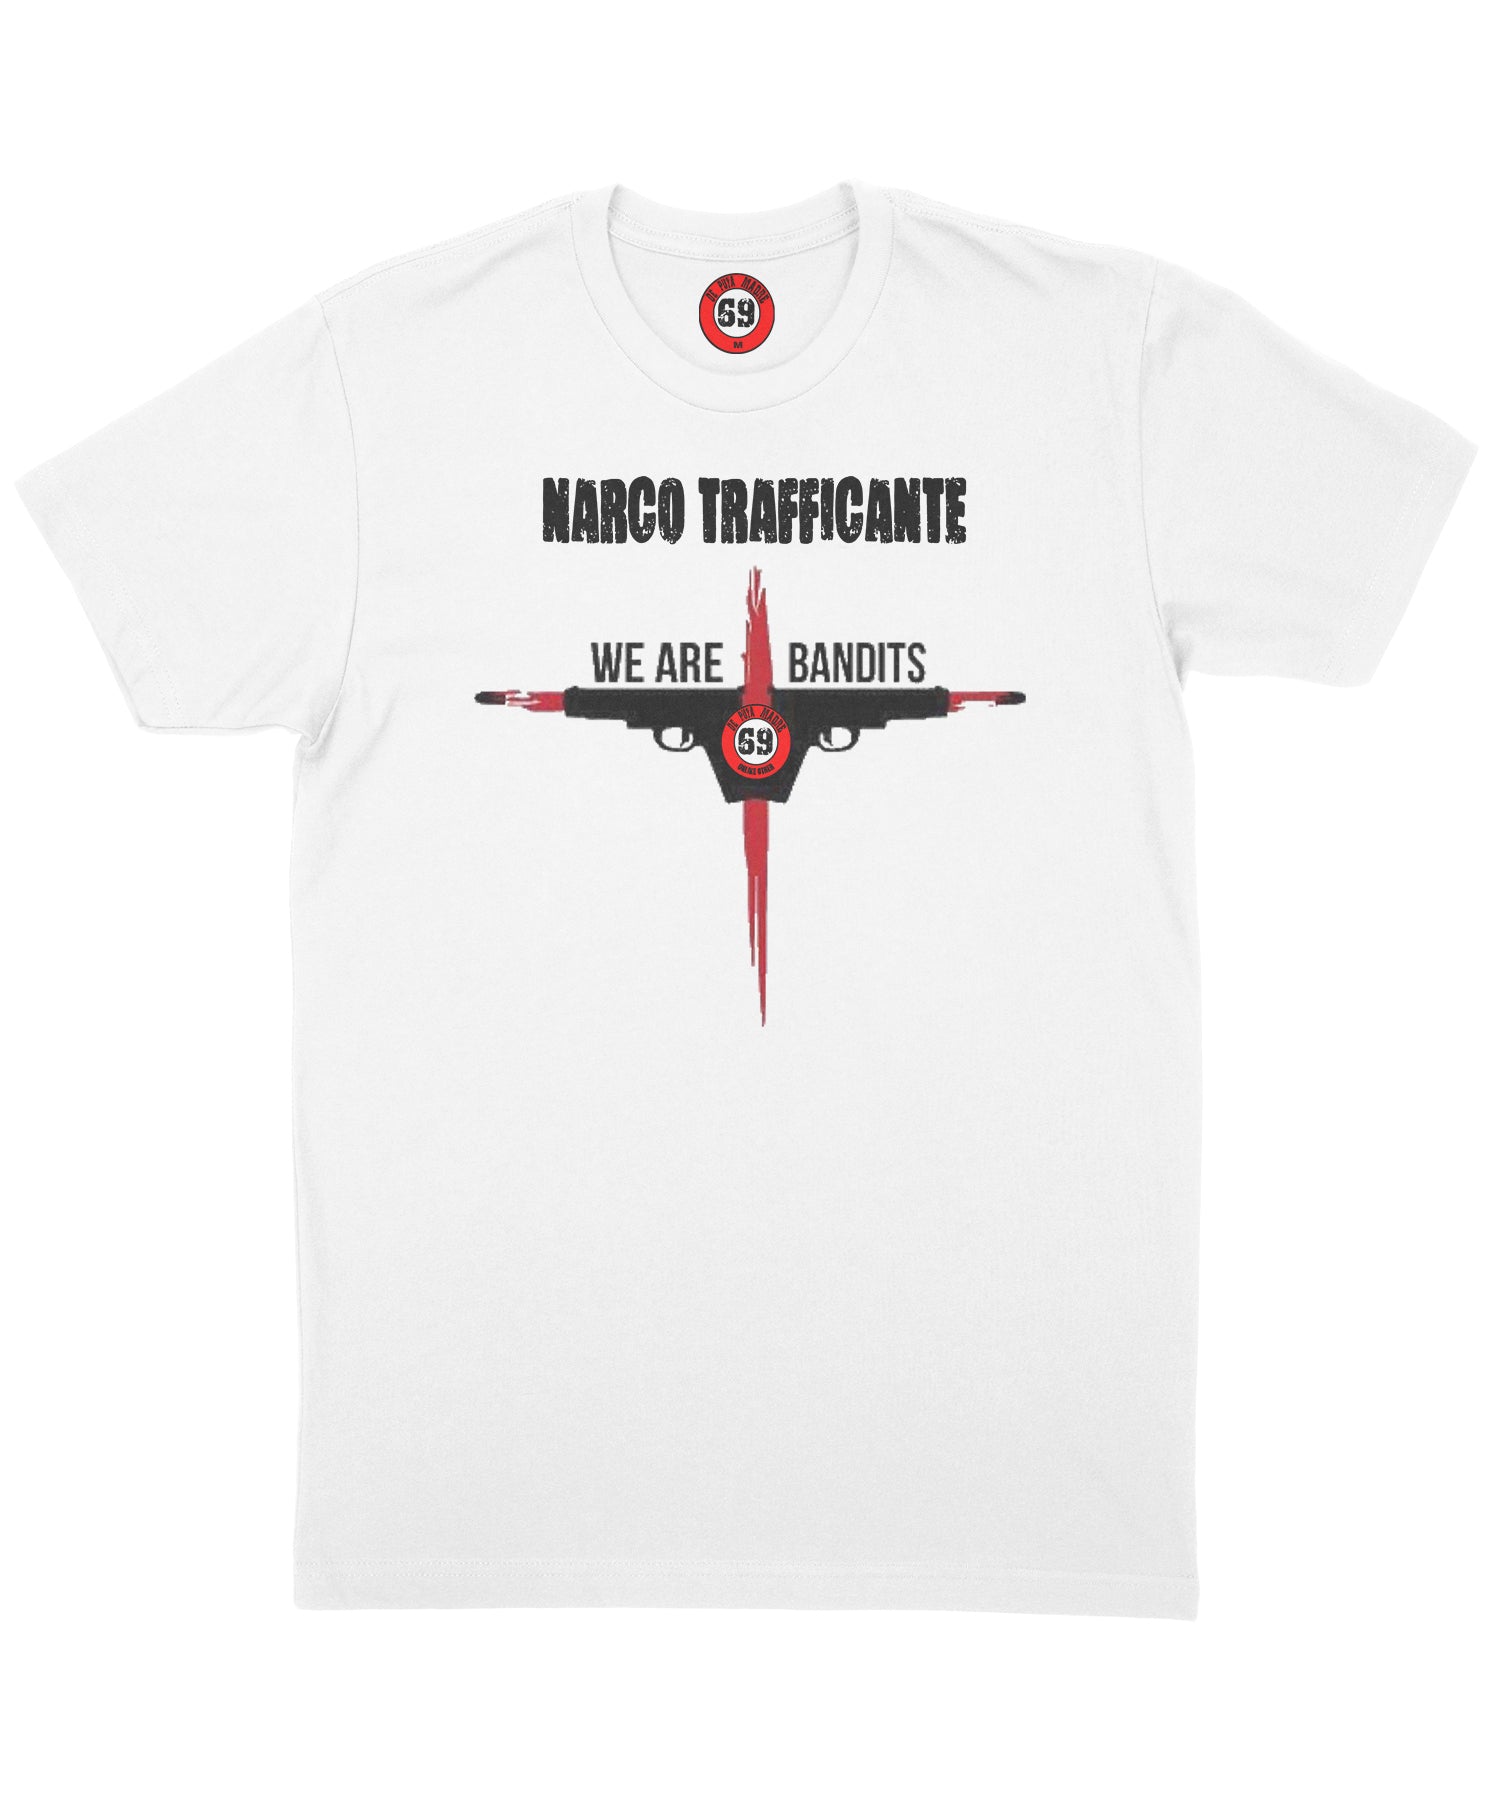 DPM69 T-shirt da uomo Design fatto a mano We are Bandits Narcos